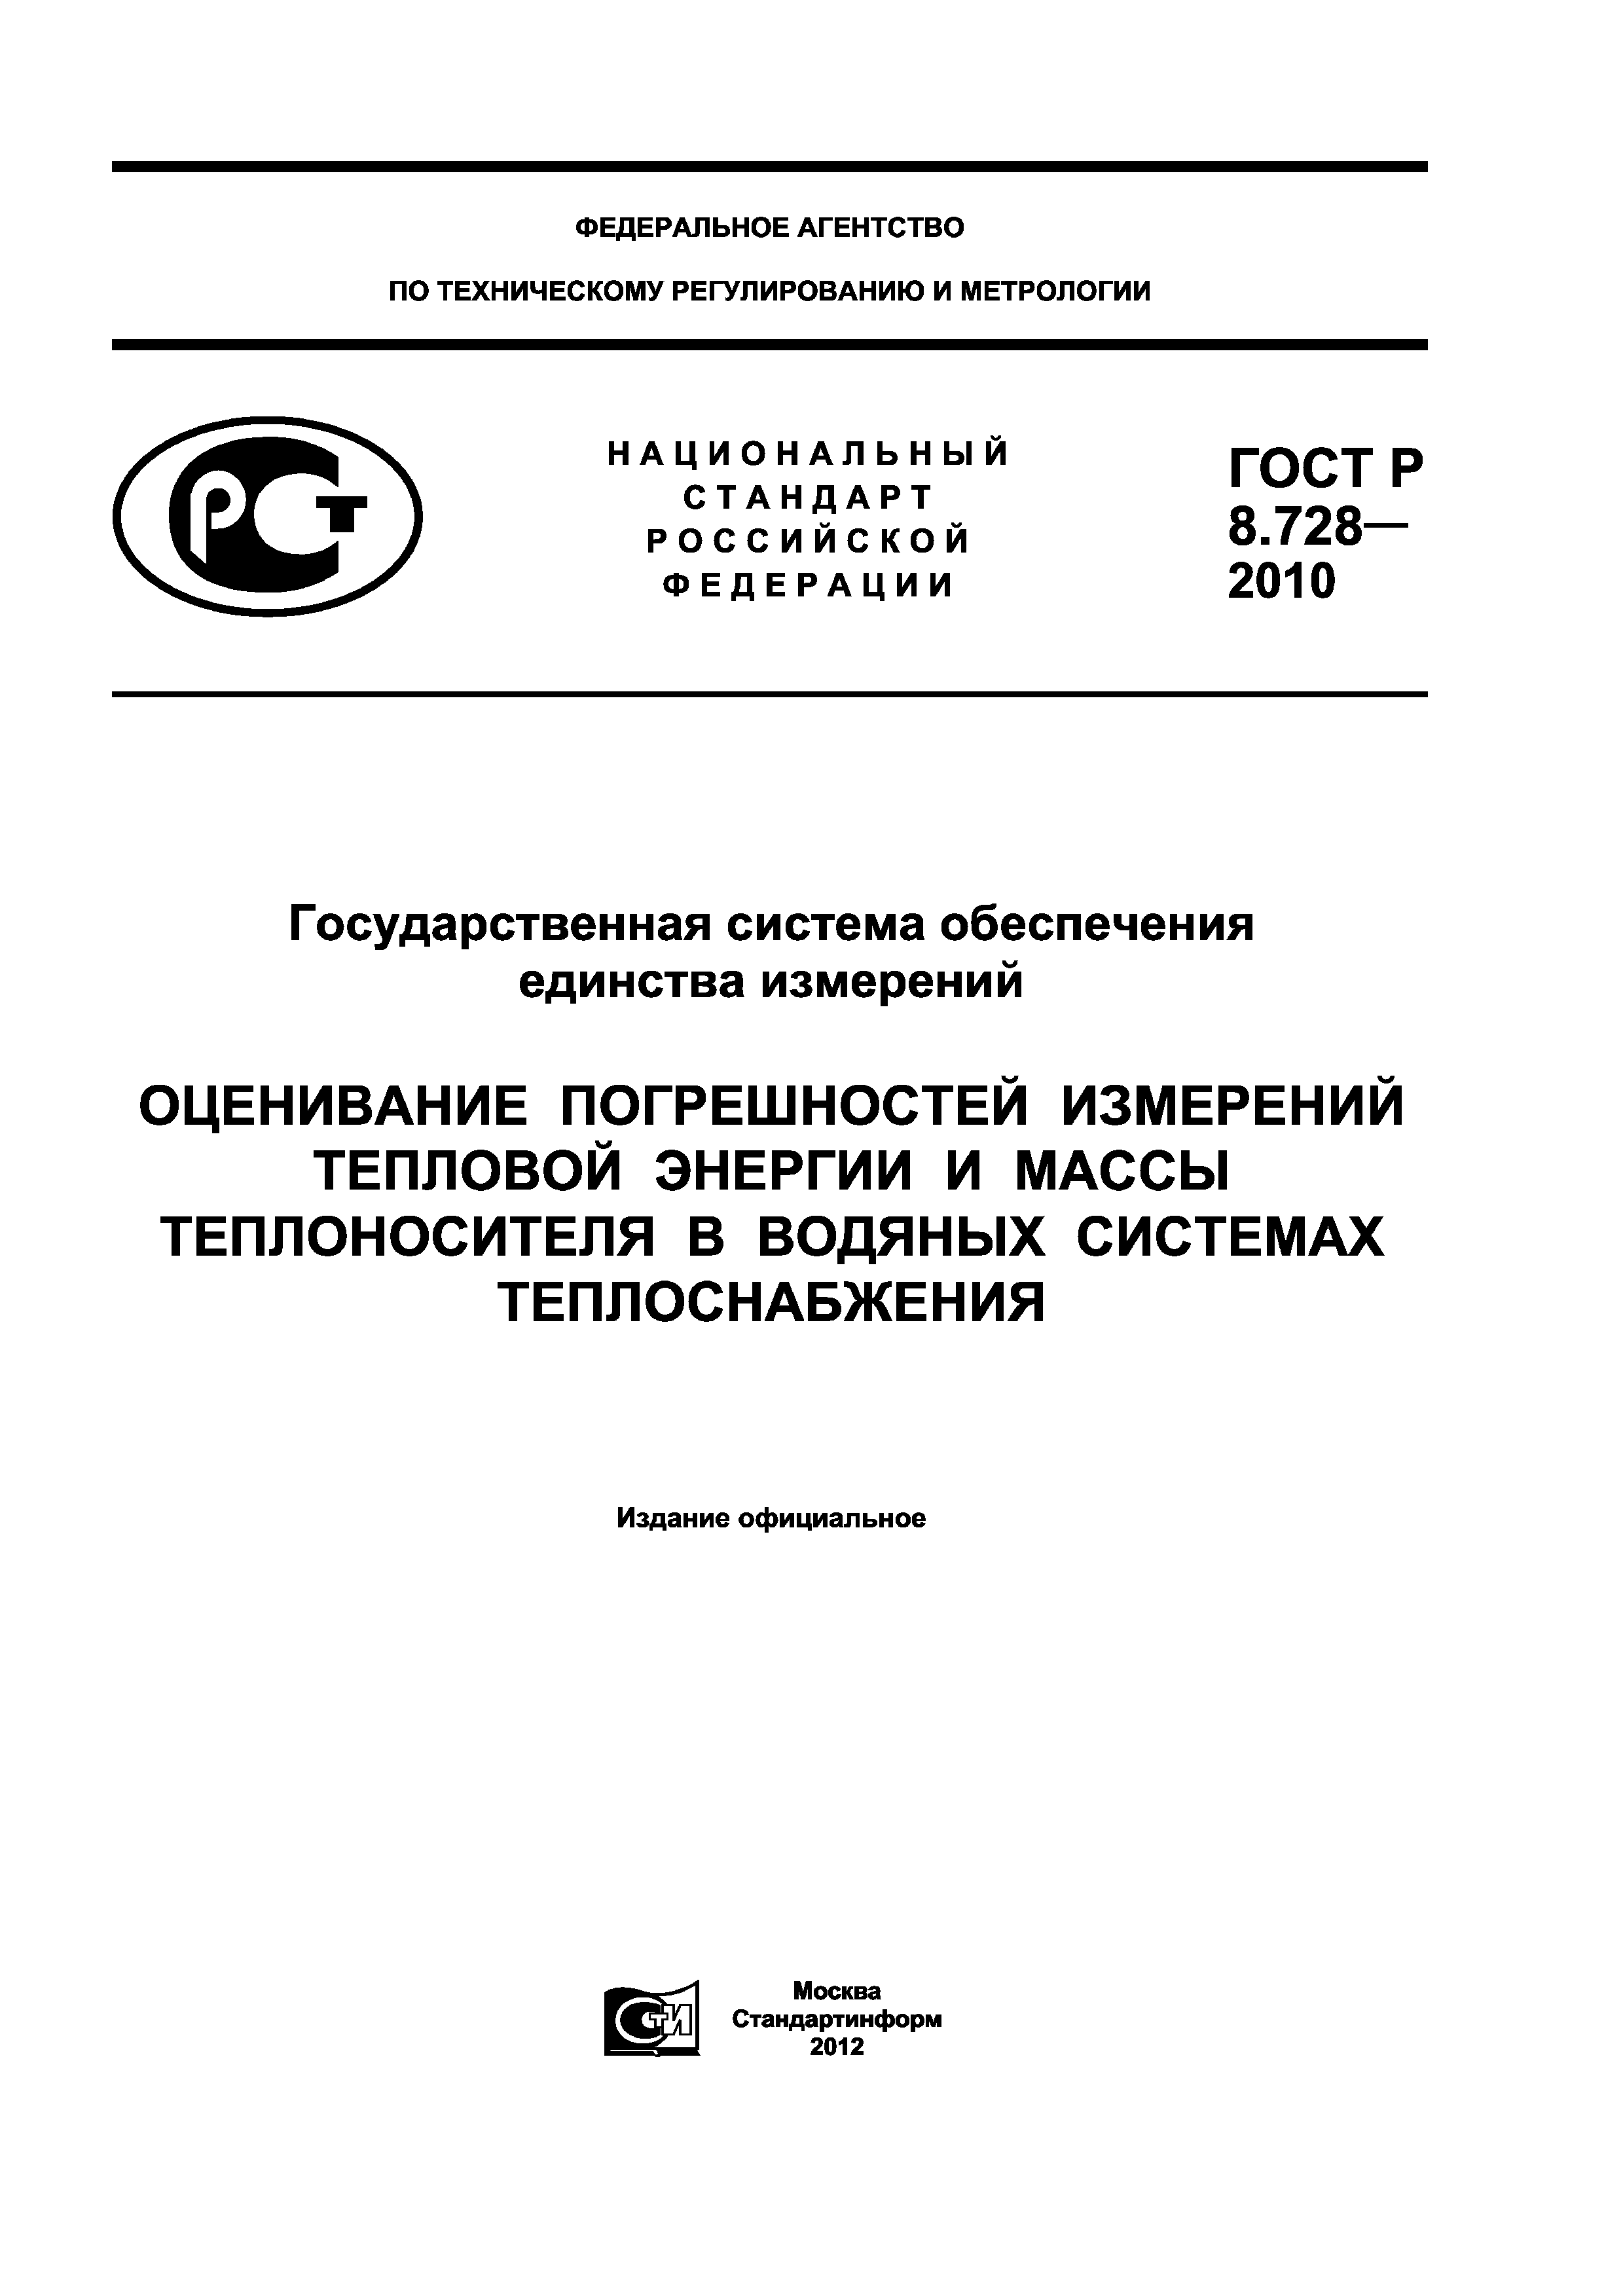 ГОСТ Р 8.728-2010